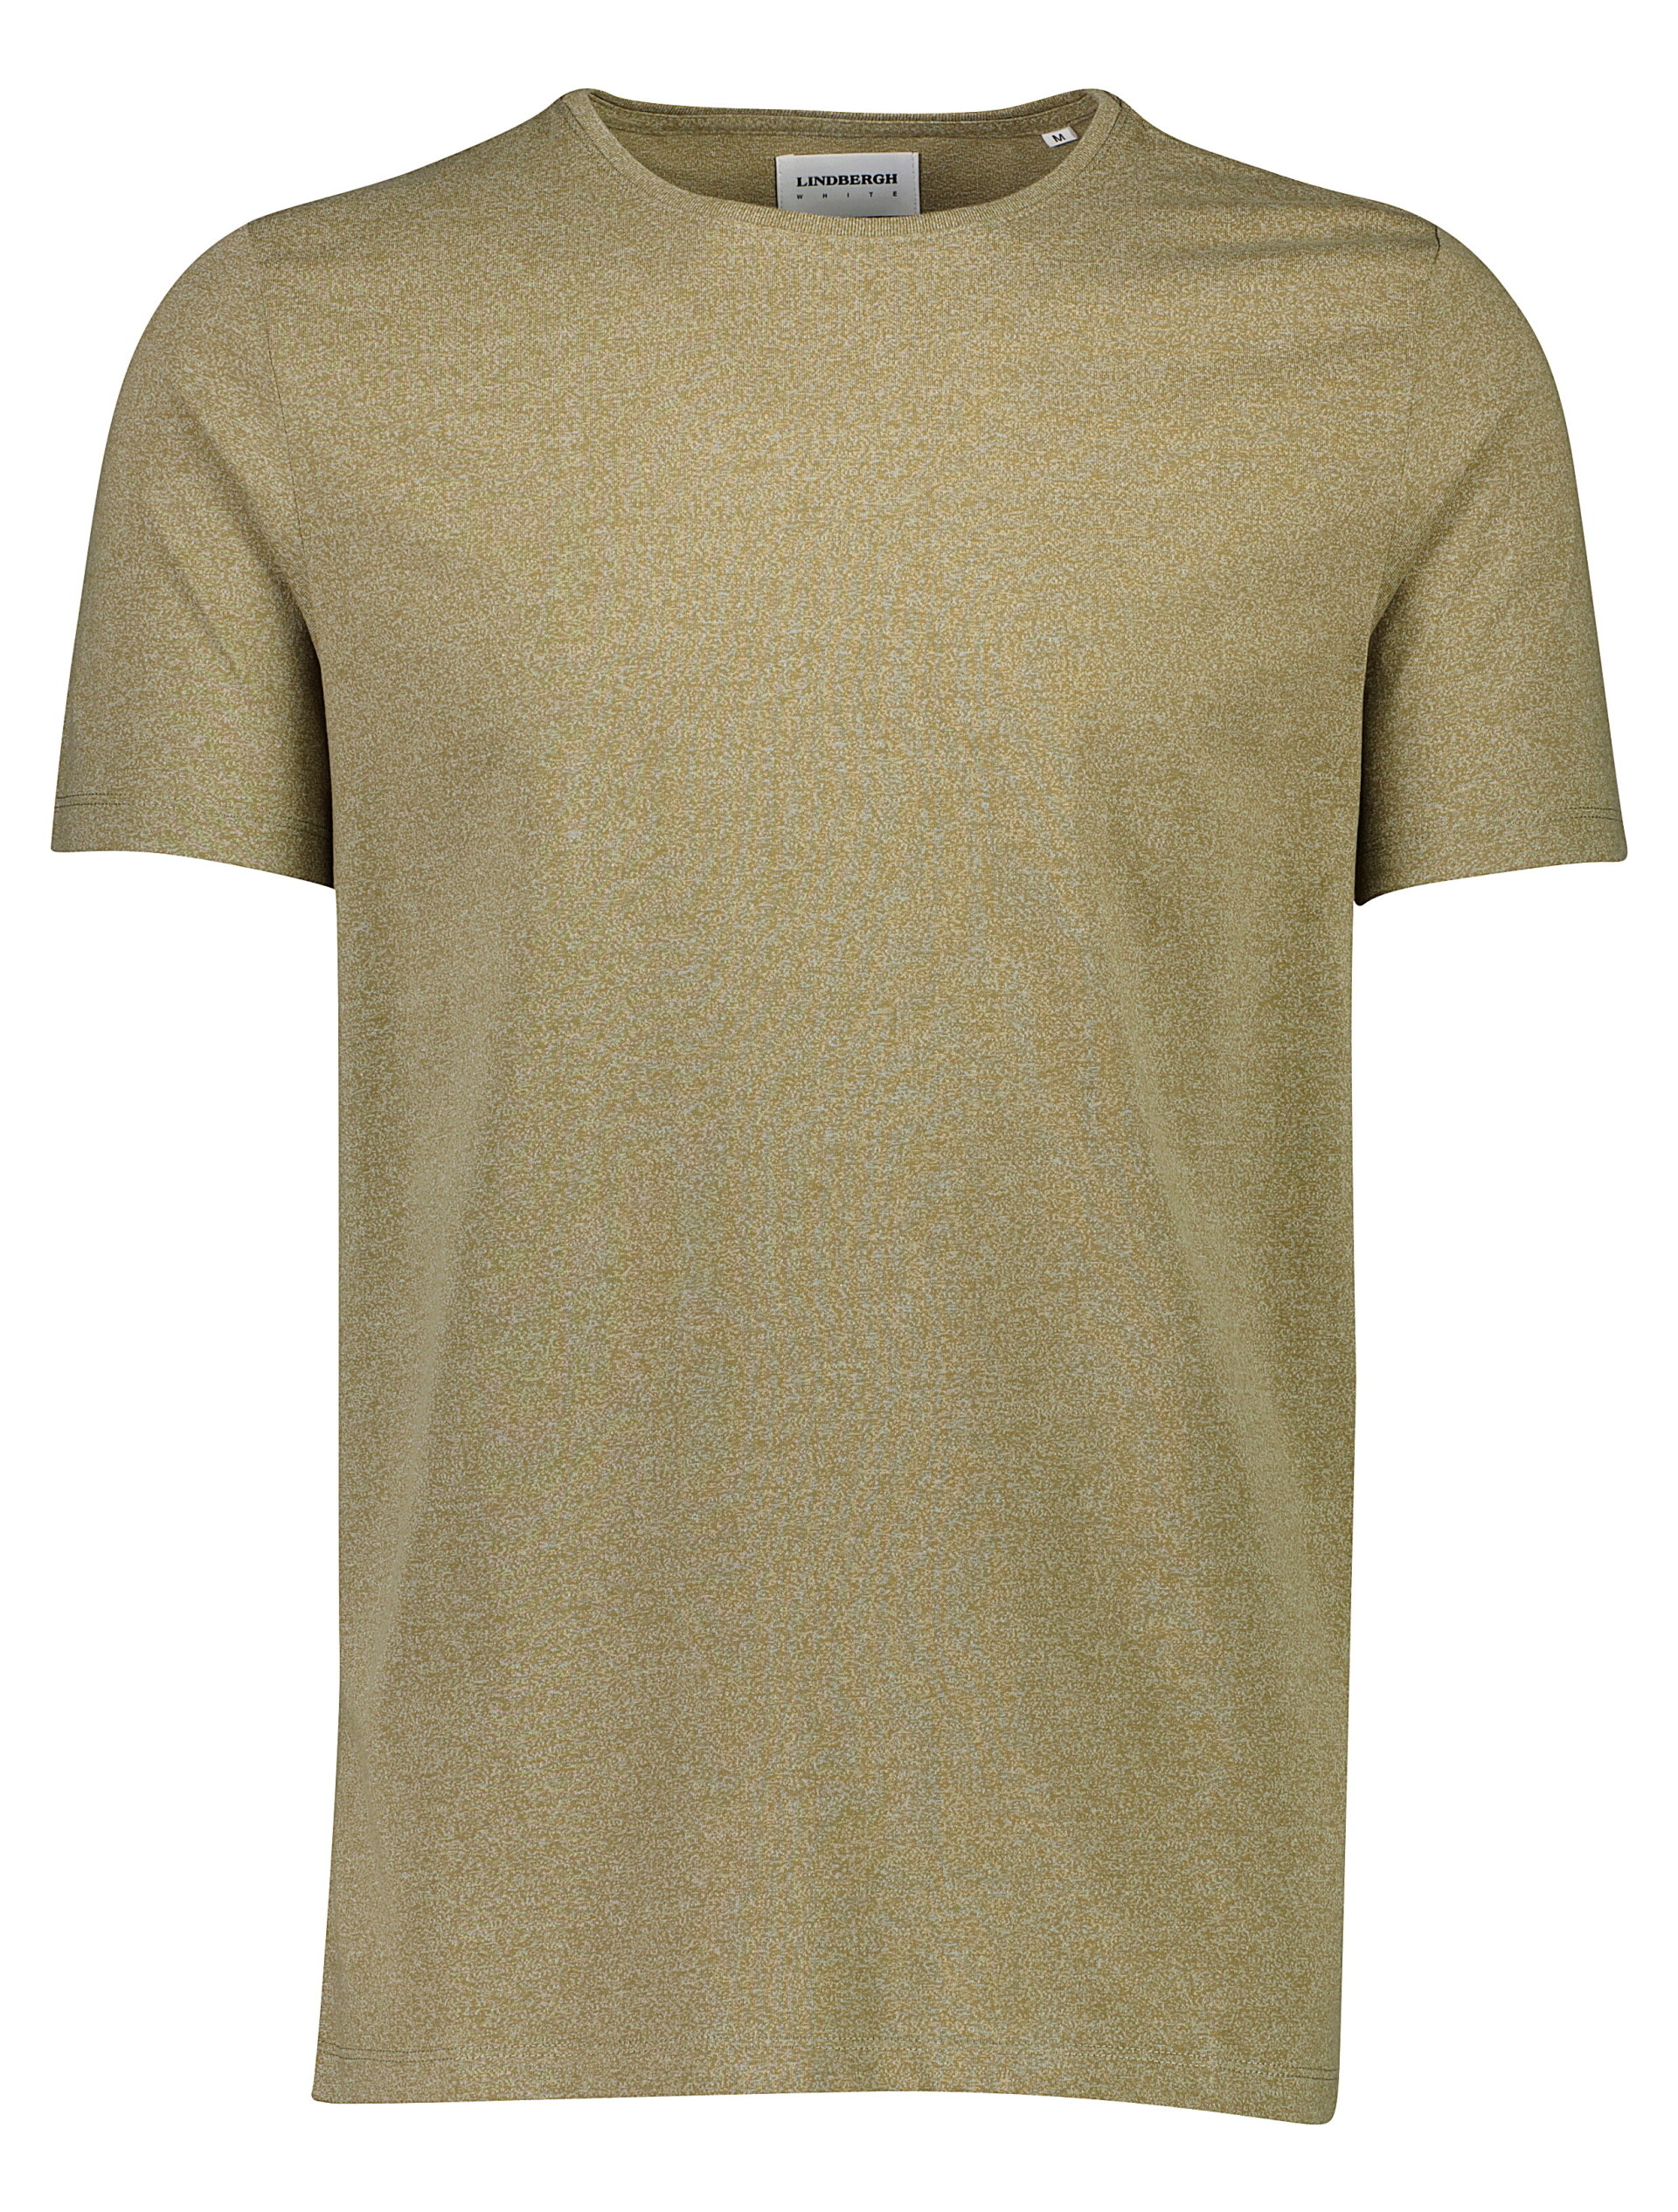 Lindbergh T-shirt groen / lt army mix 123